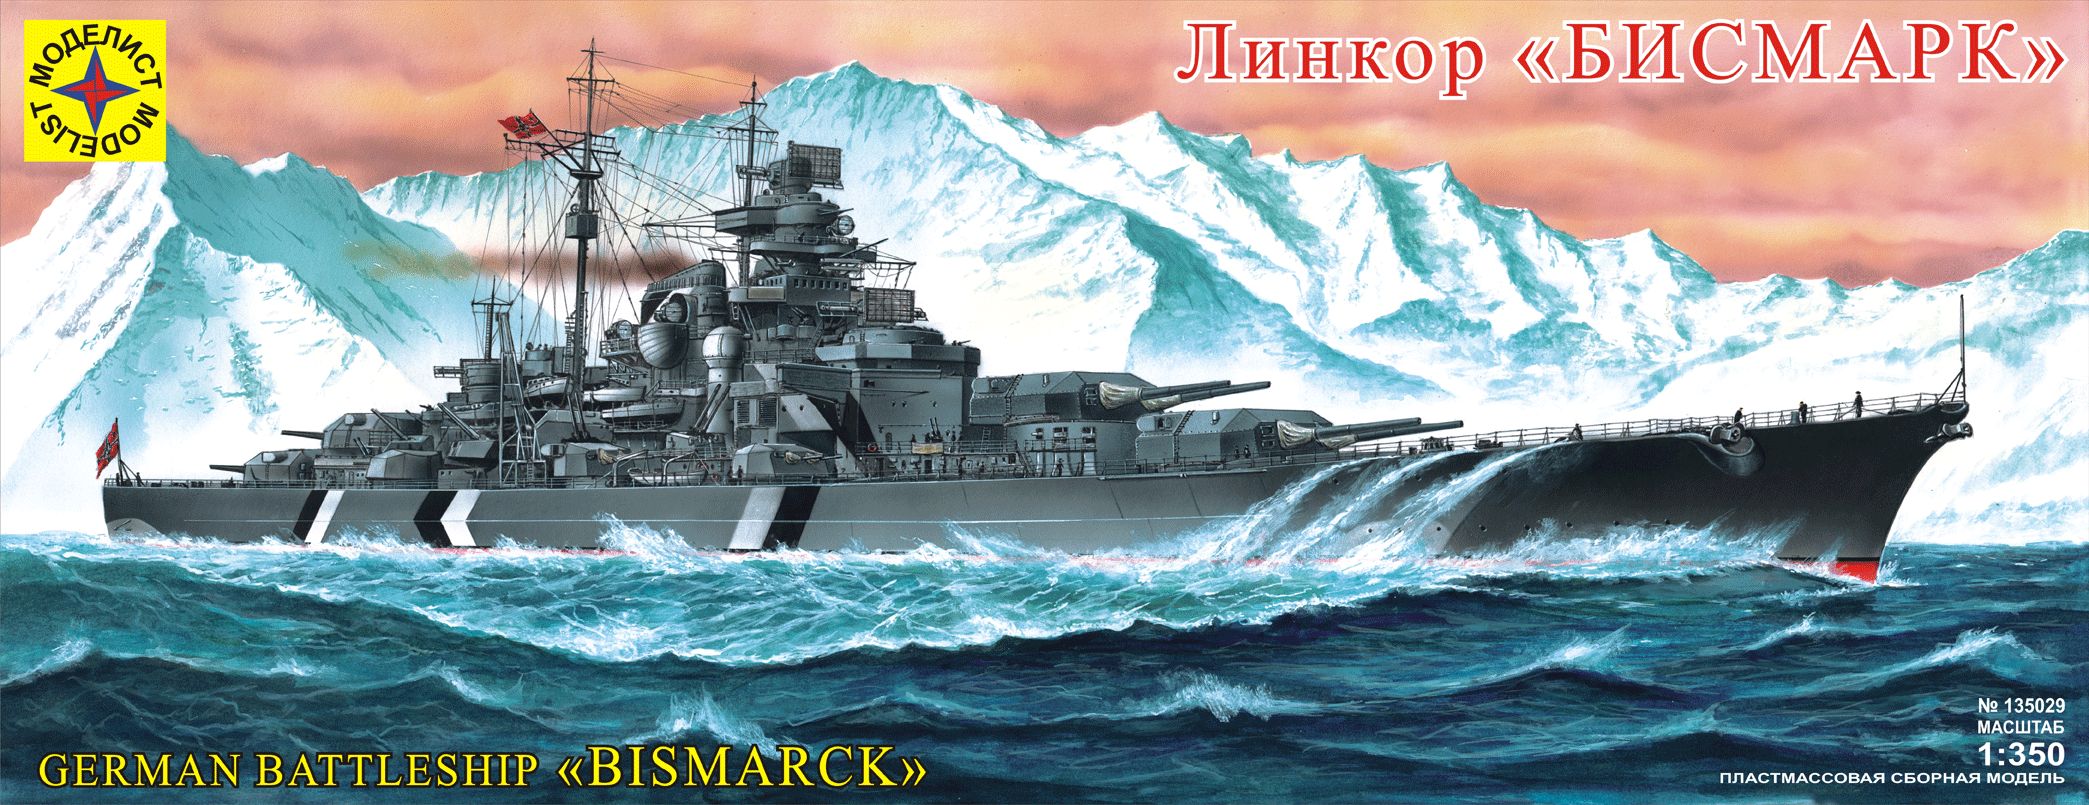 135029  флот  Линкор "Бисмарк" (1:350)